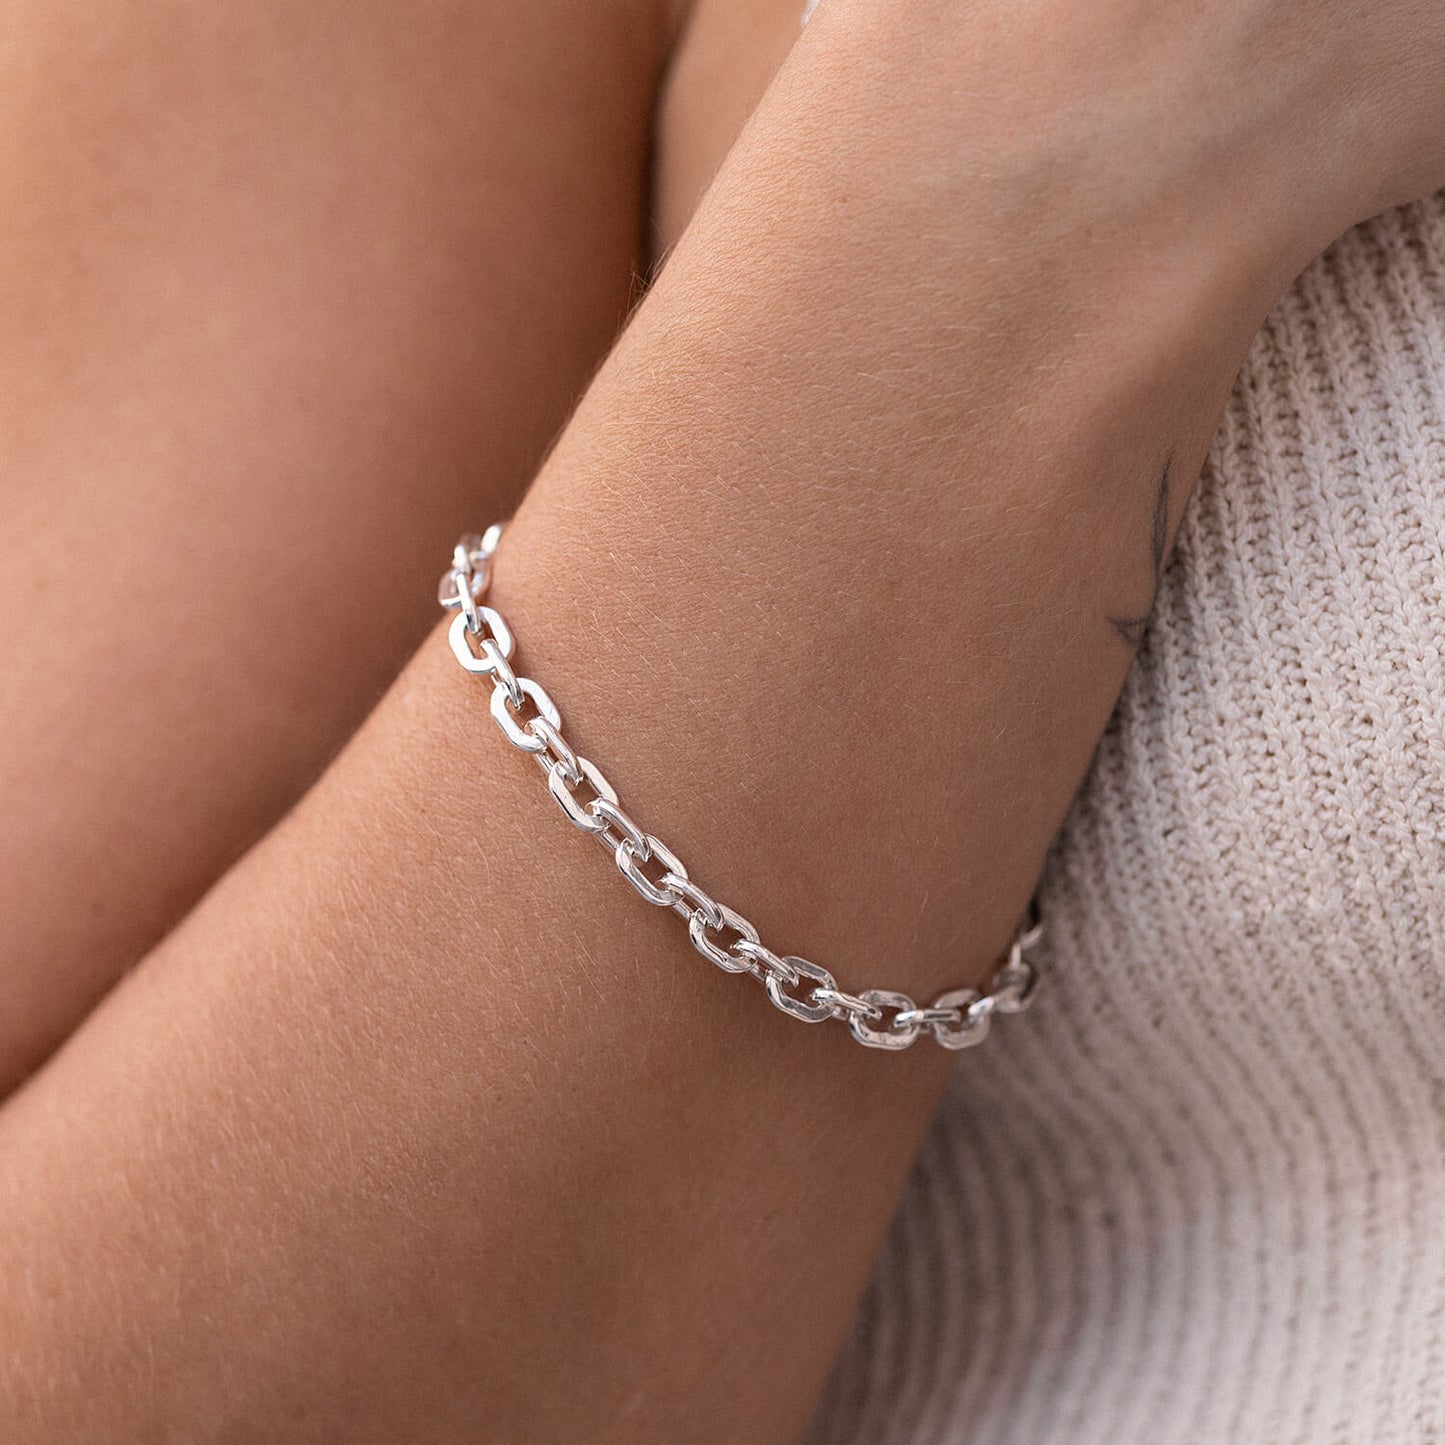 Chain Bracelet